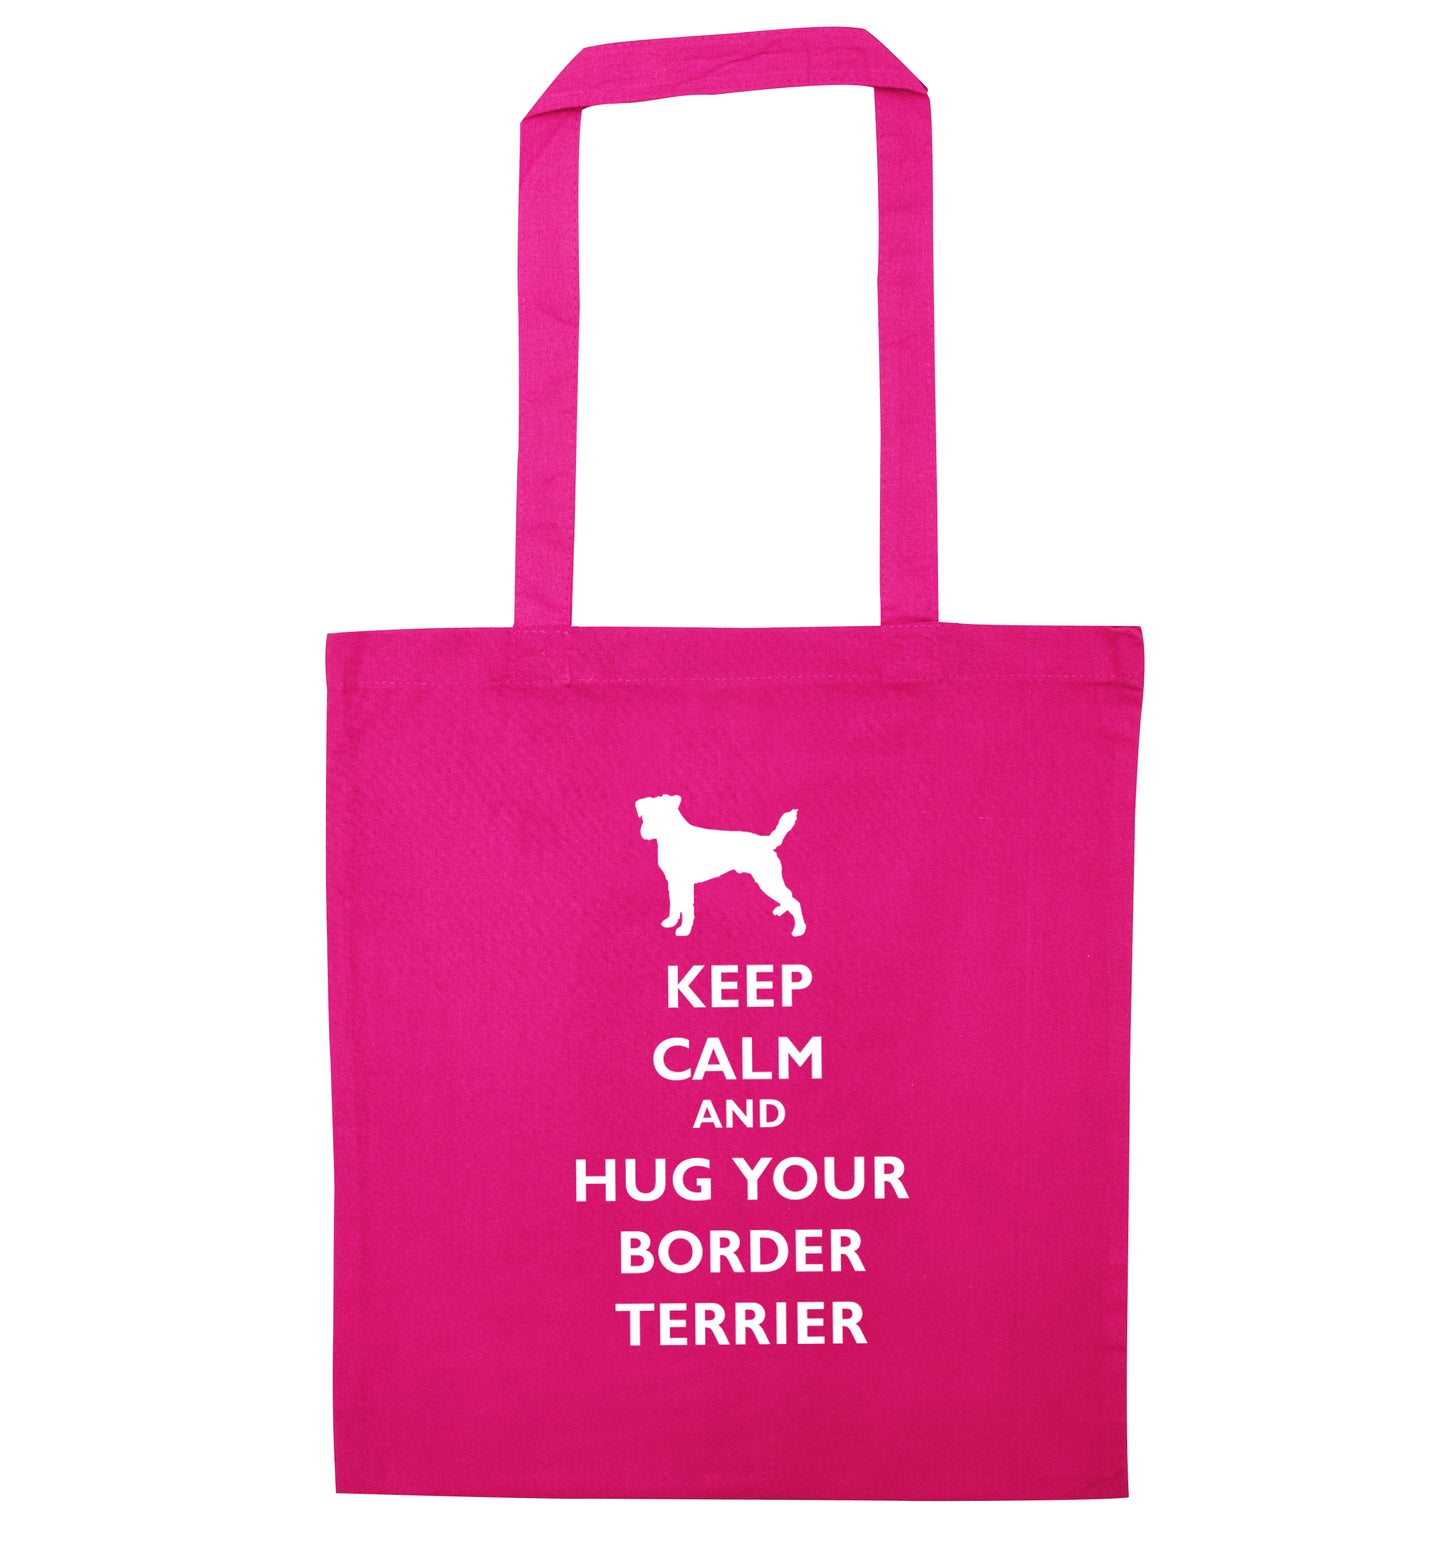 Keep calm and hug your border terrier pink tote bag